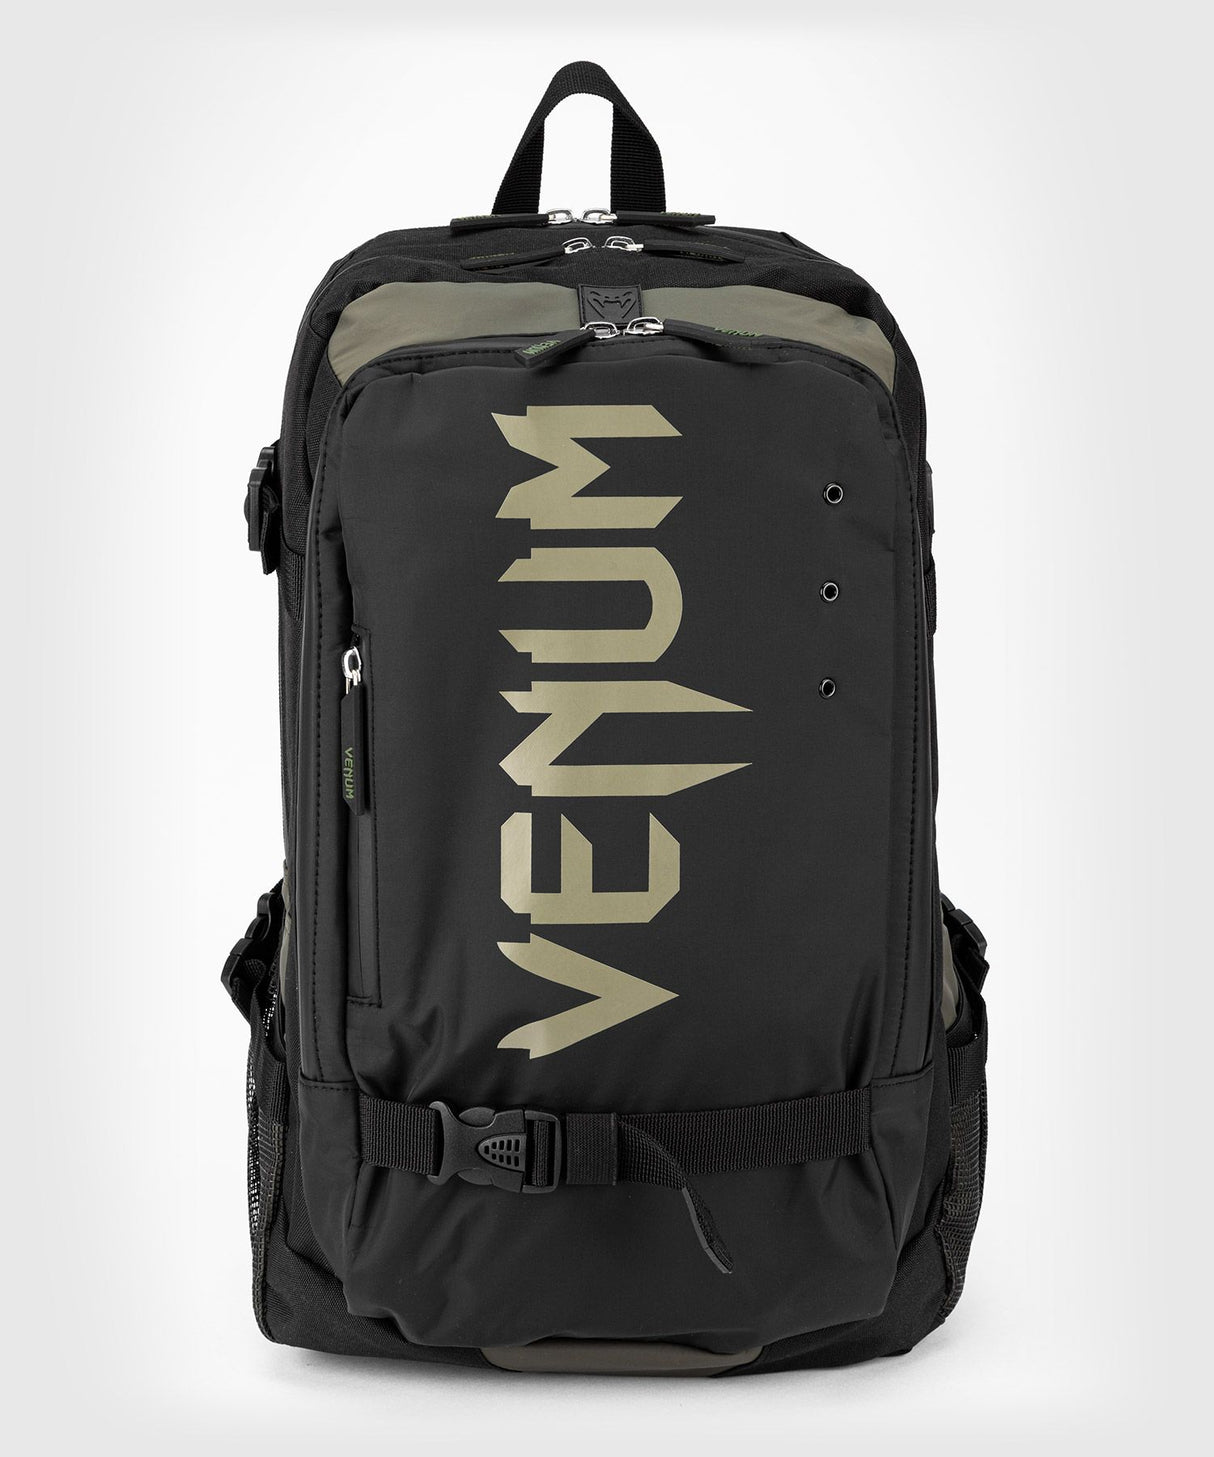 Venum Challenger Pro Evo Rucksack - schwarz/khaki, VENUM-03832-200